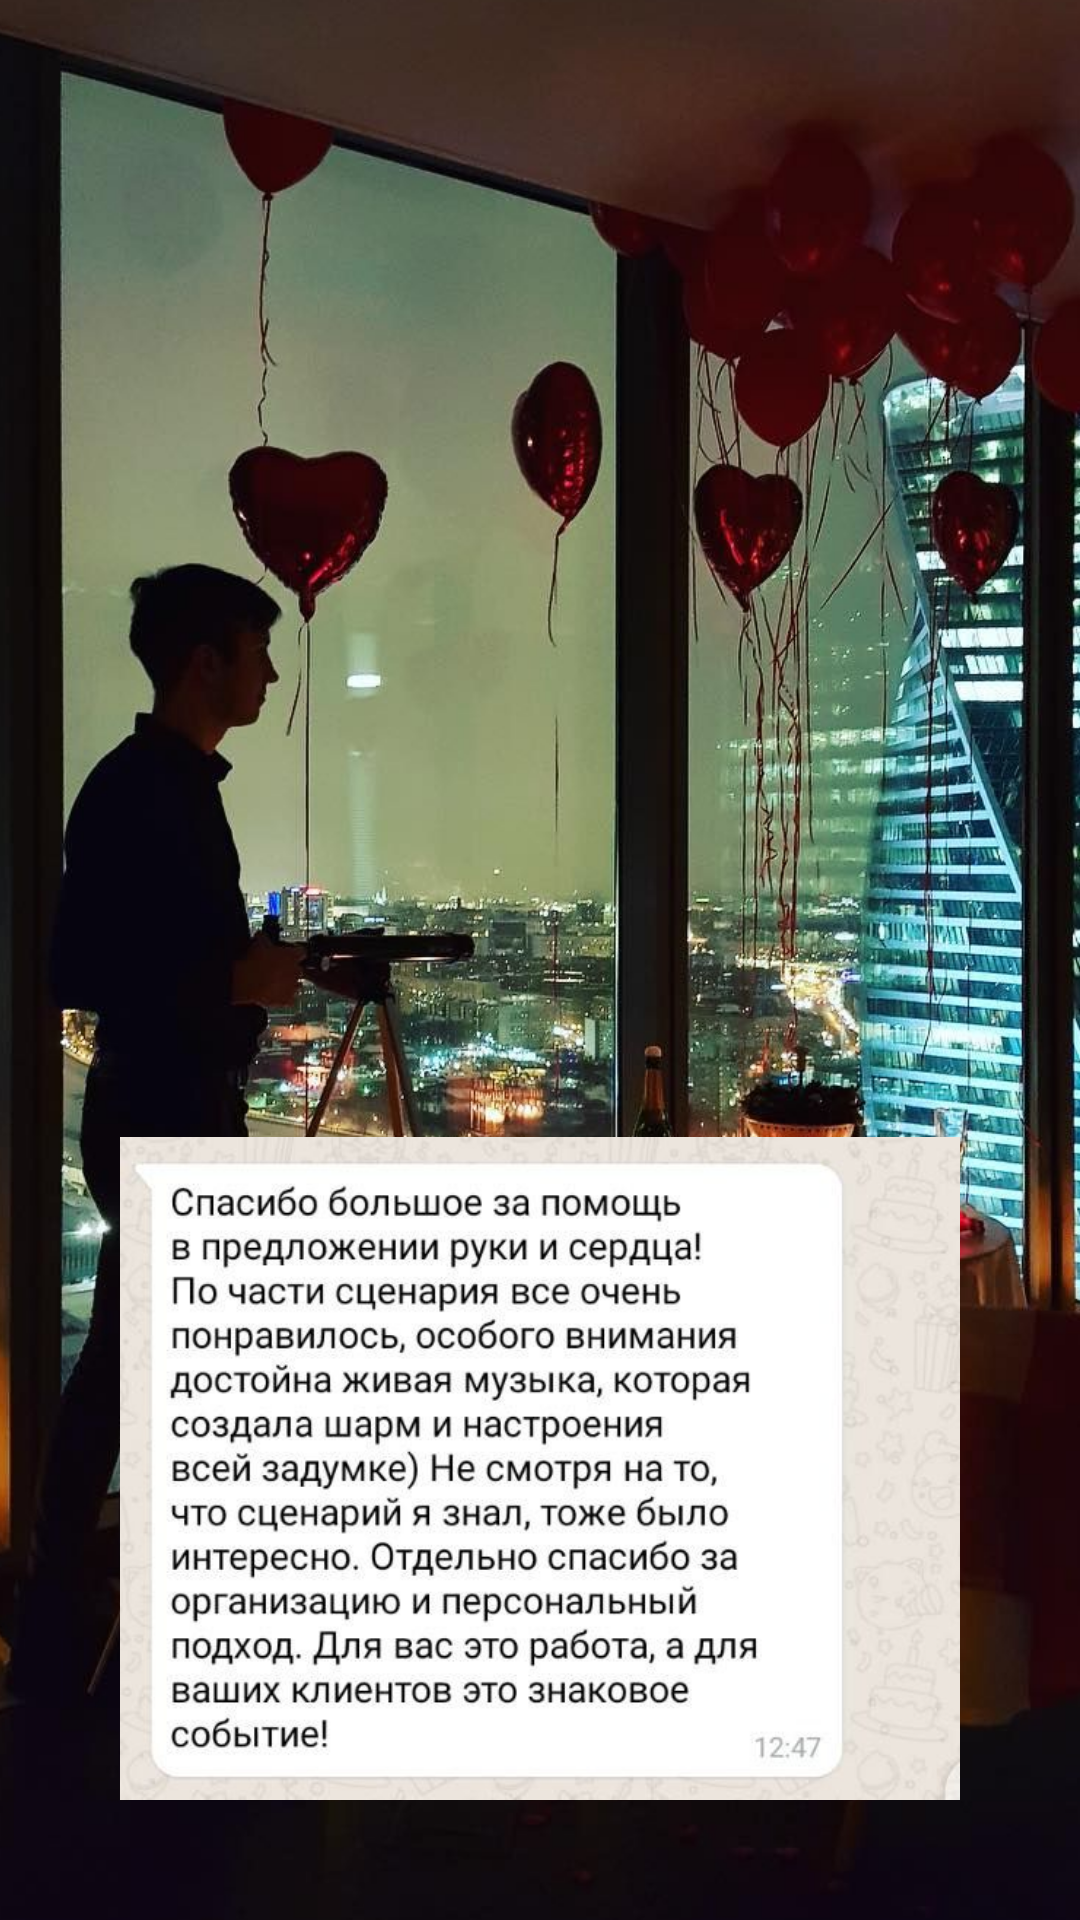 Организация предложения руки и сердца в Подольске
от компании Pandaevent